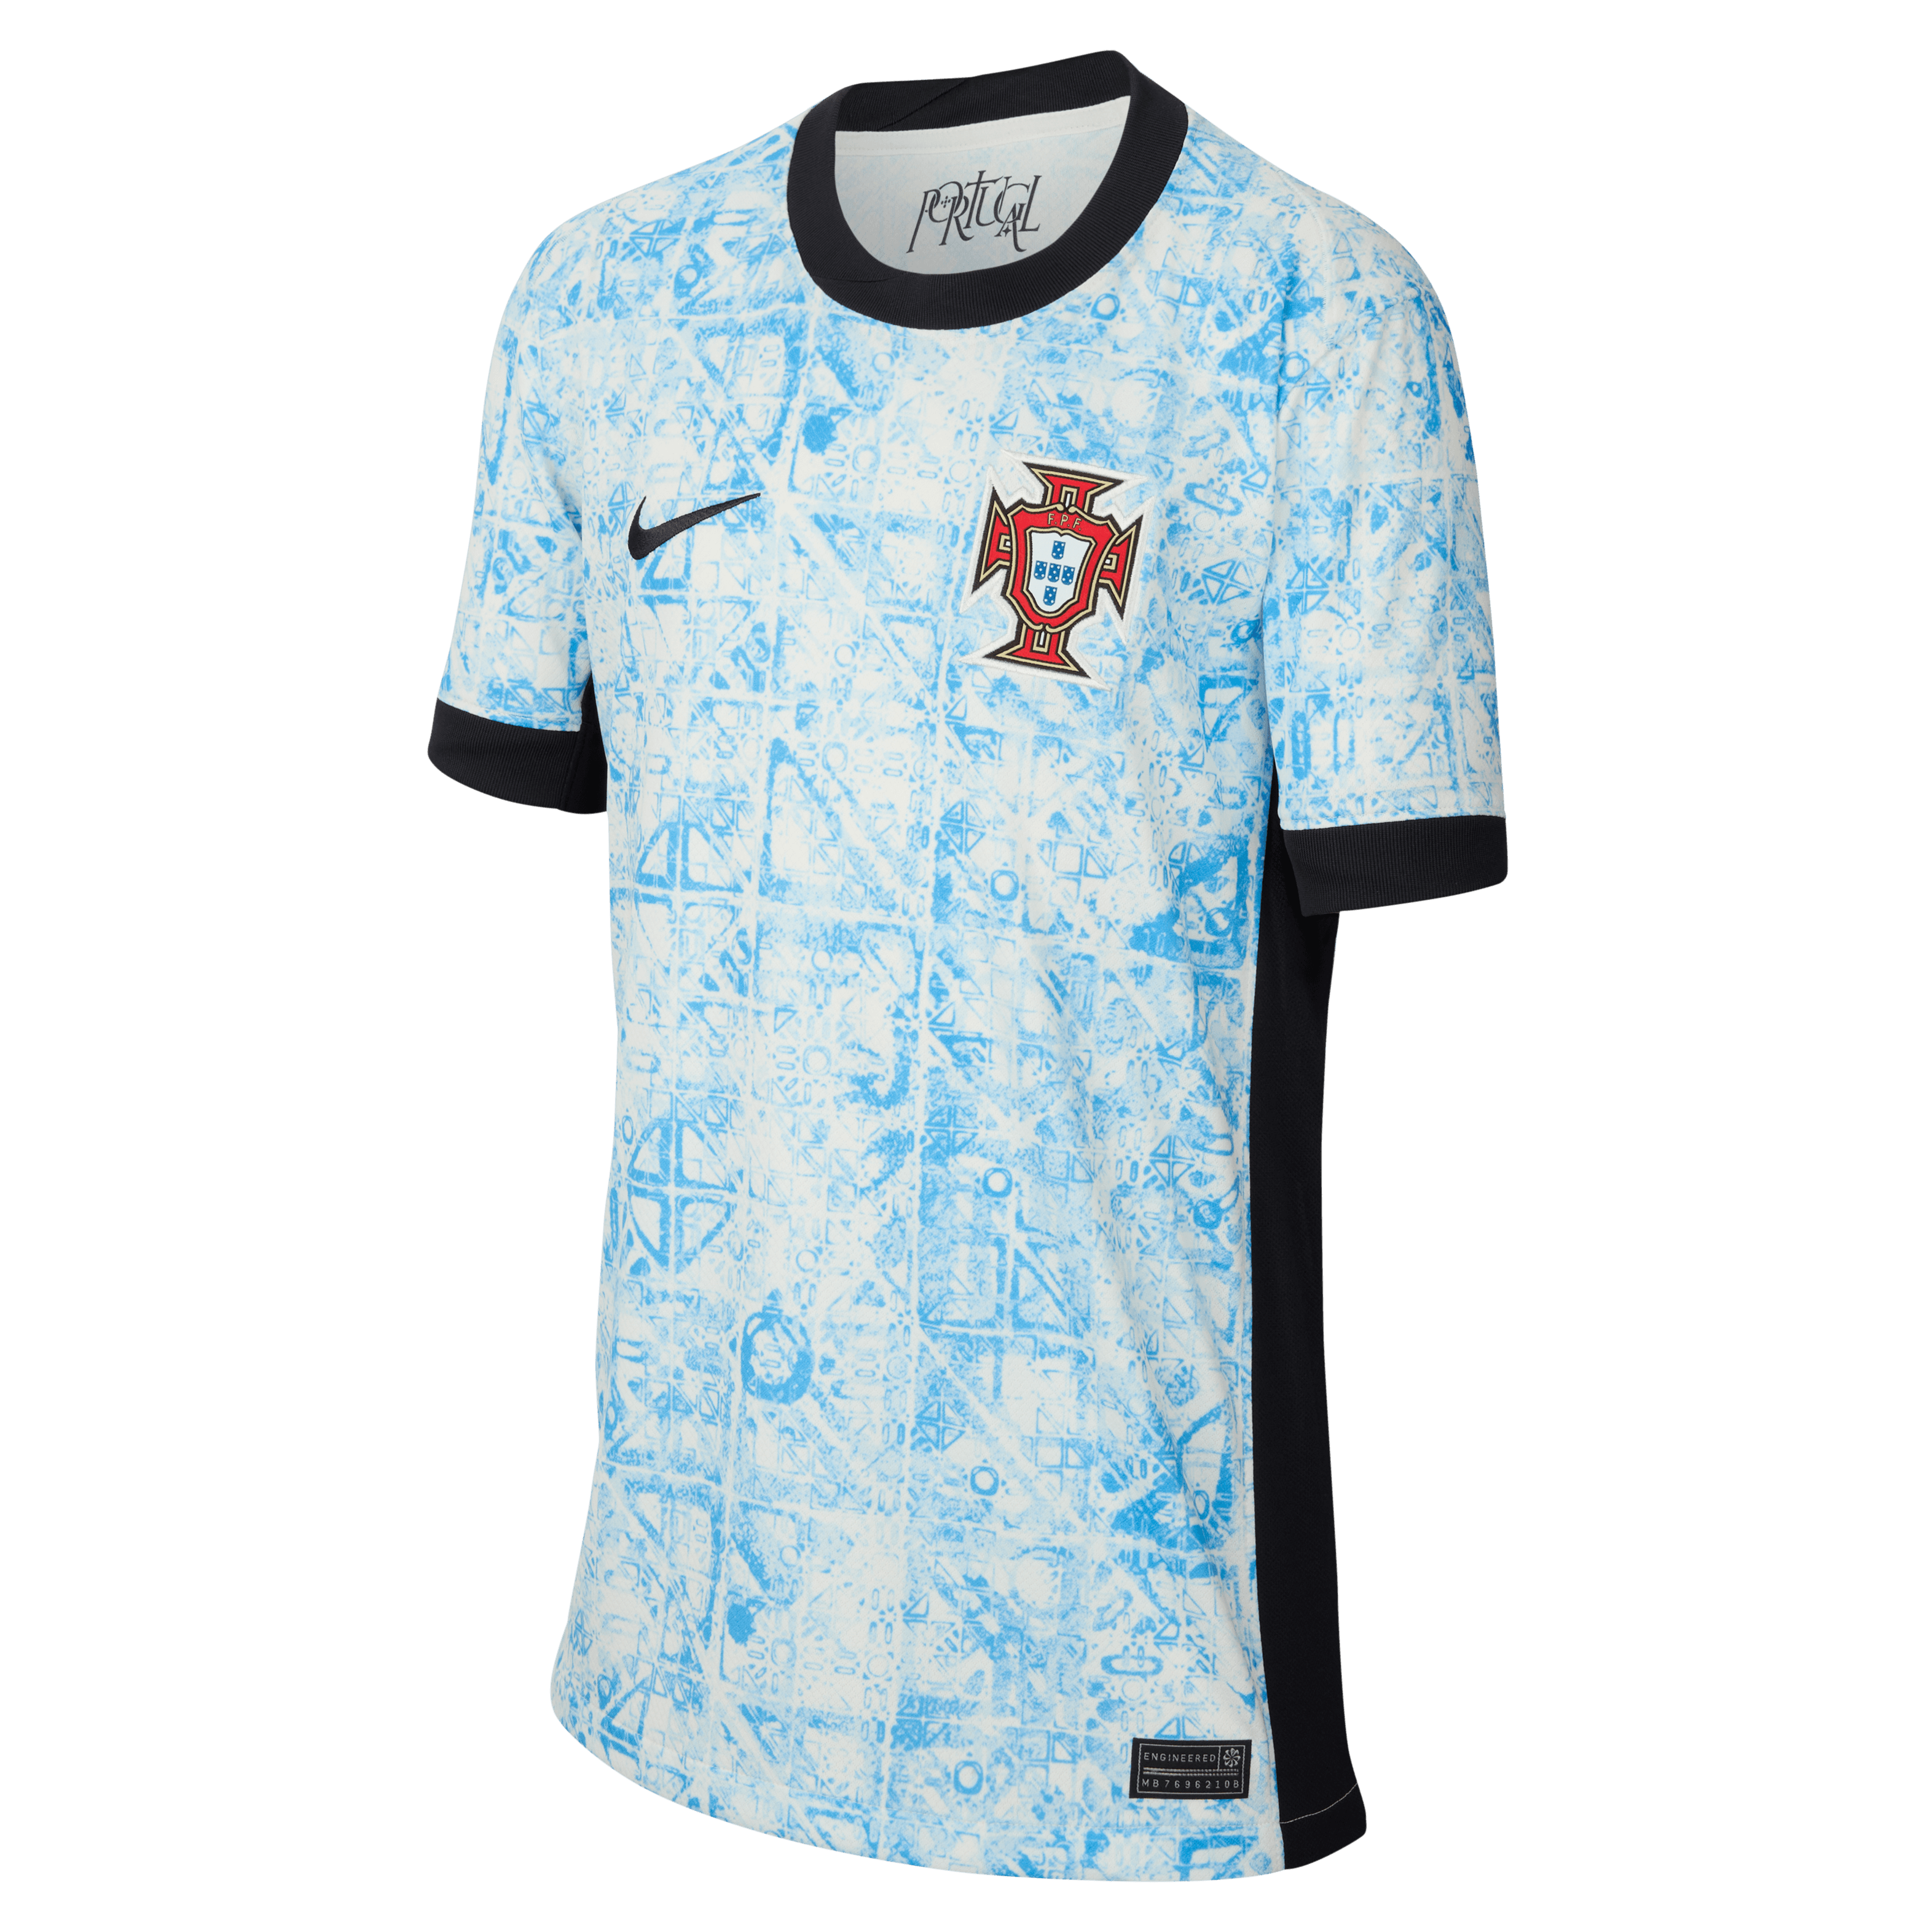 Nike Youth Portugal (Men's Team) Stadium Away Dri-FIT Soccer Replica Jersey 24/25